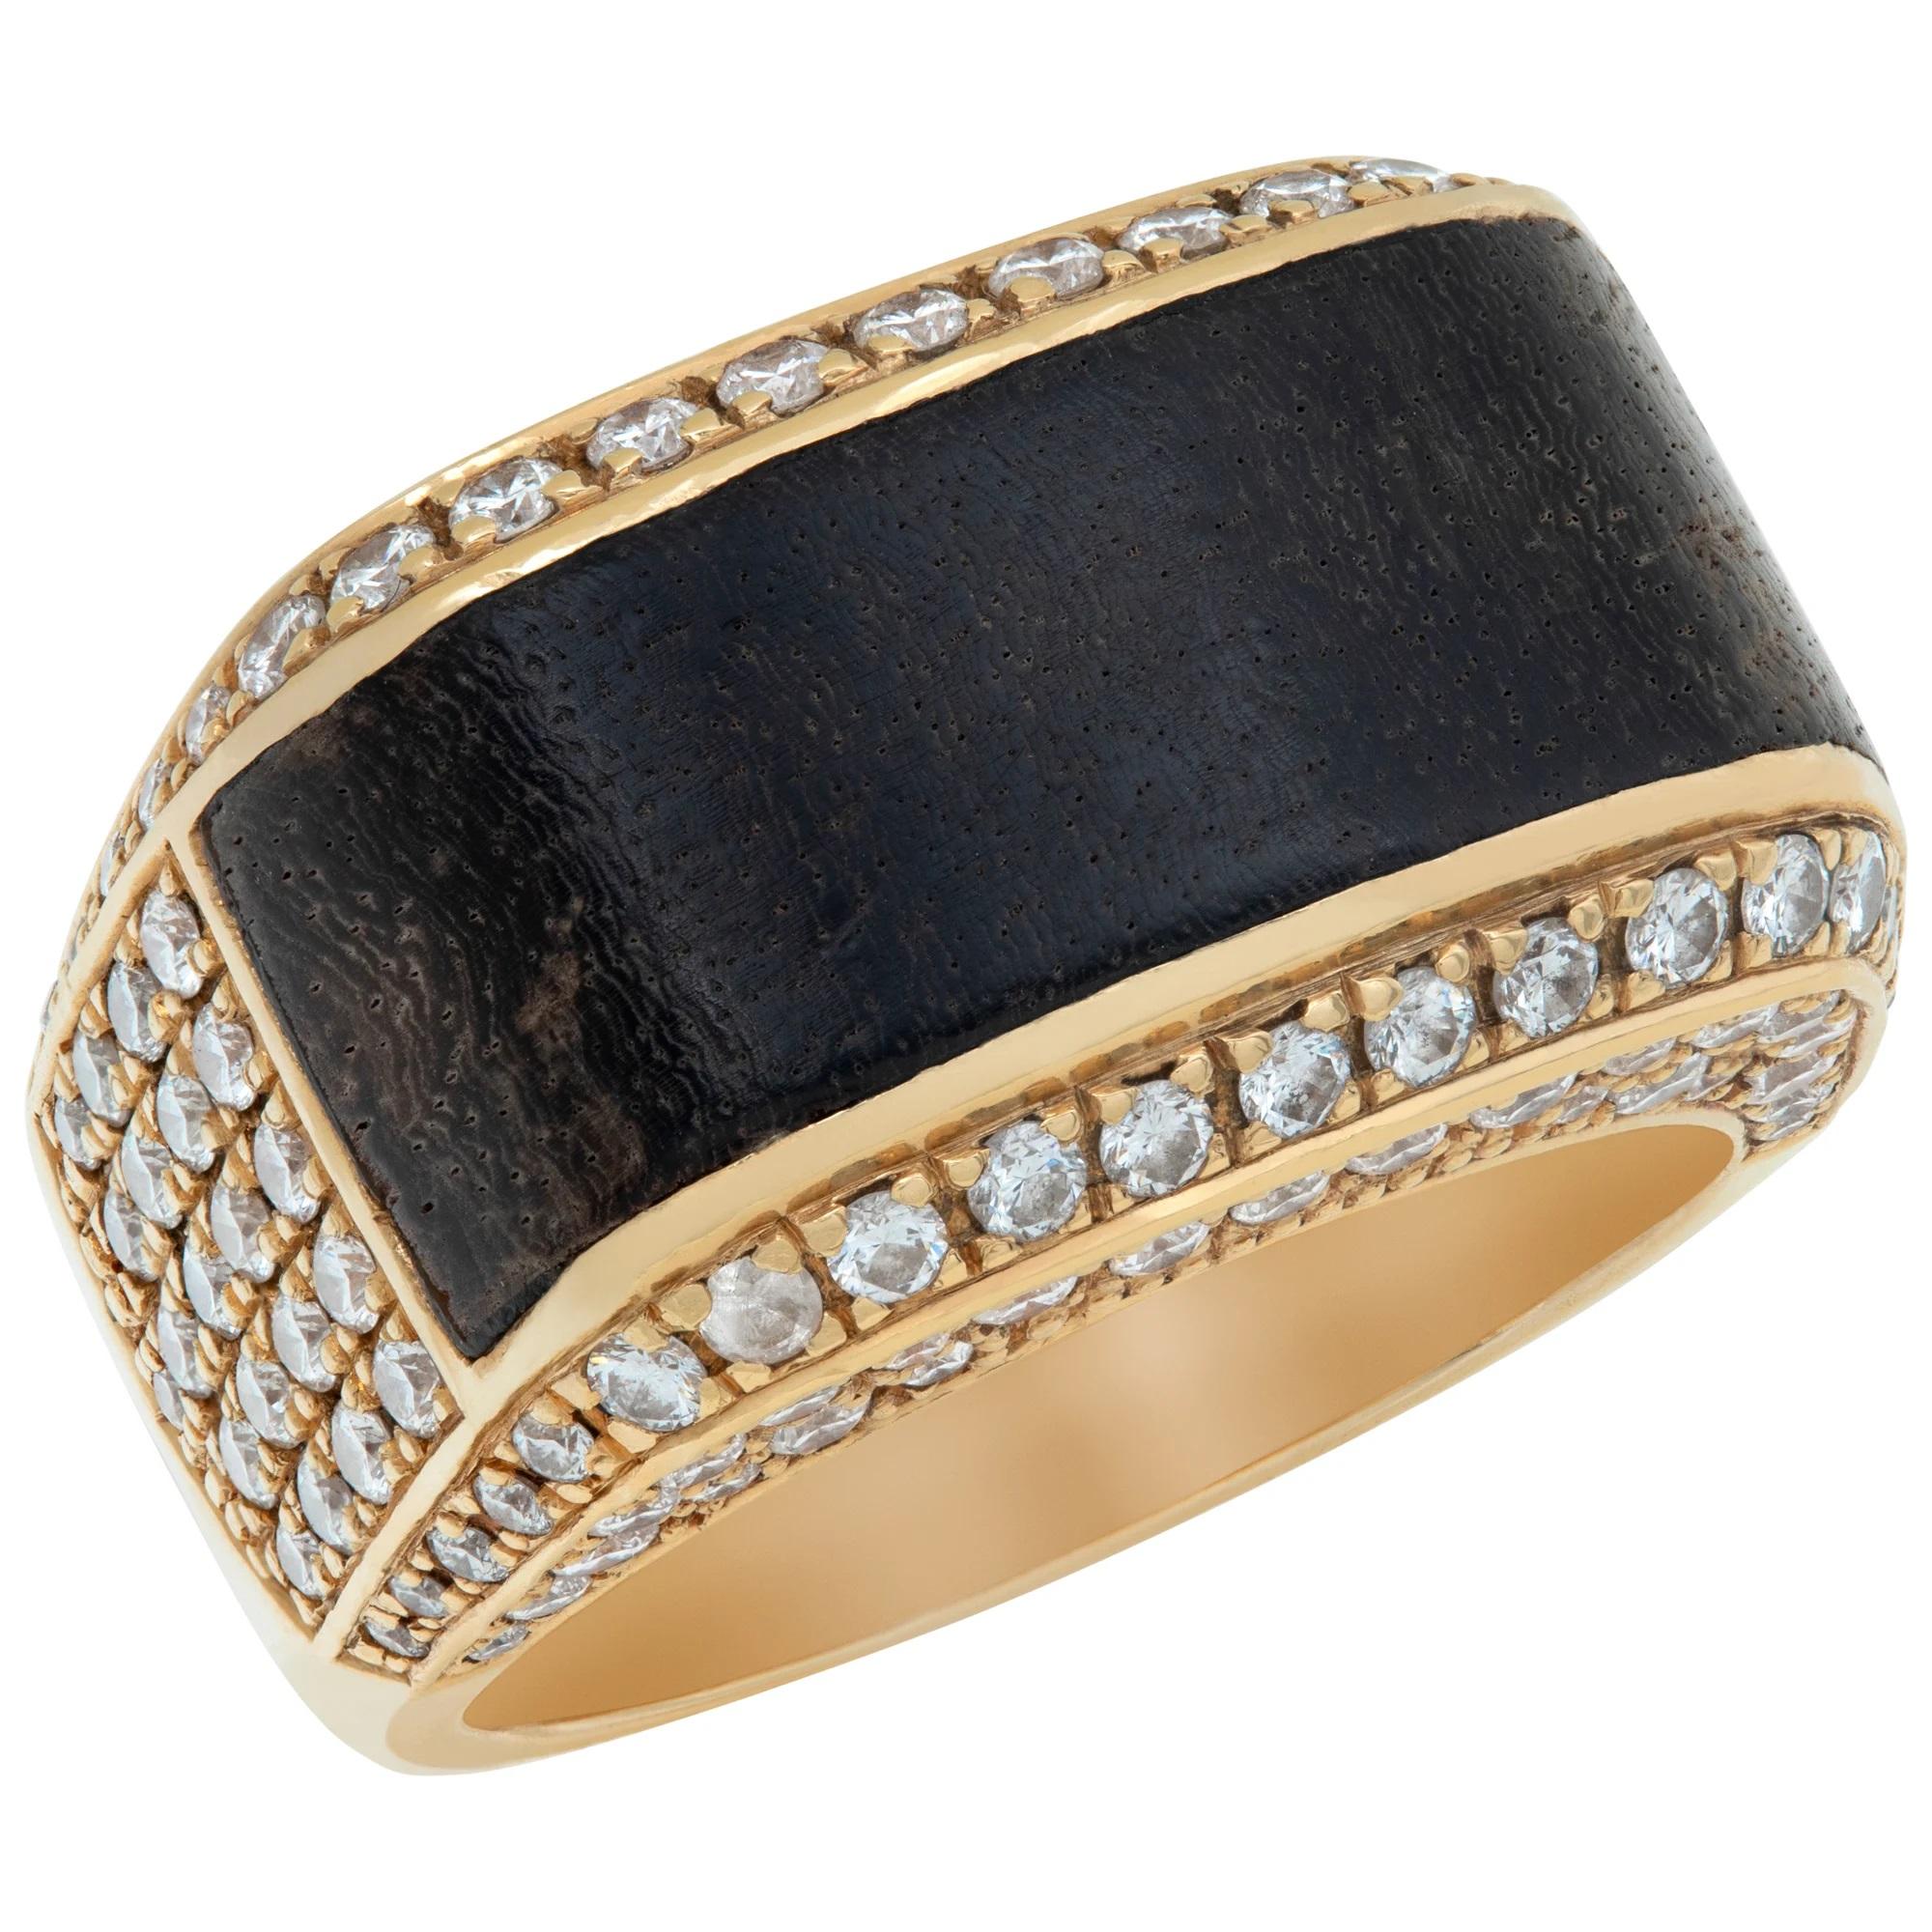 Di Modolo rich Mahogany Wood Milano designer ring w/ diamonds in yellow gold In Excellent Condition For Sale In Surfside, FL